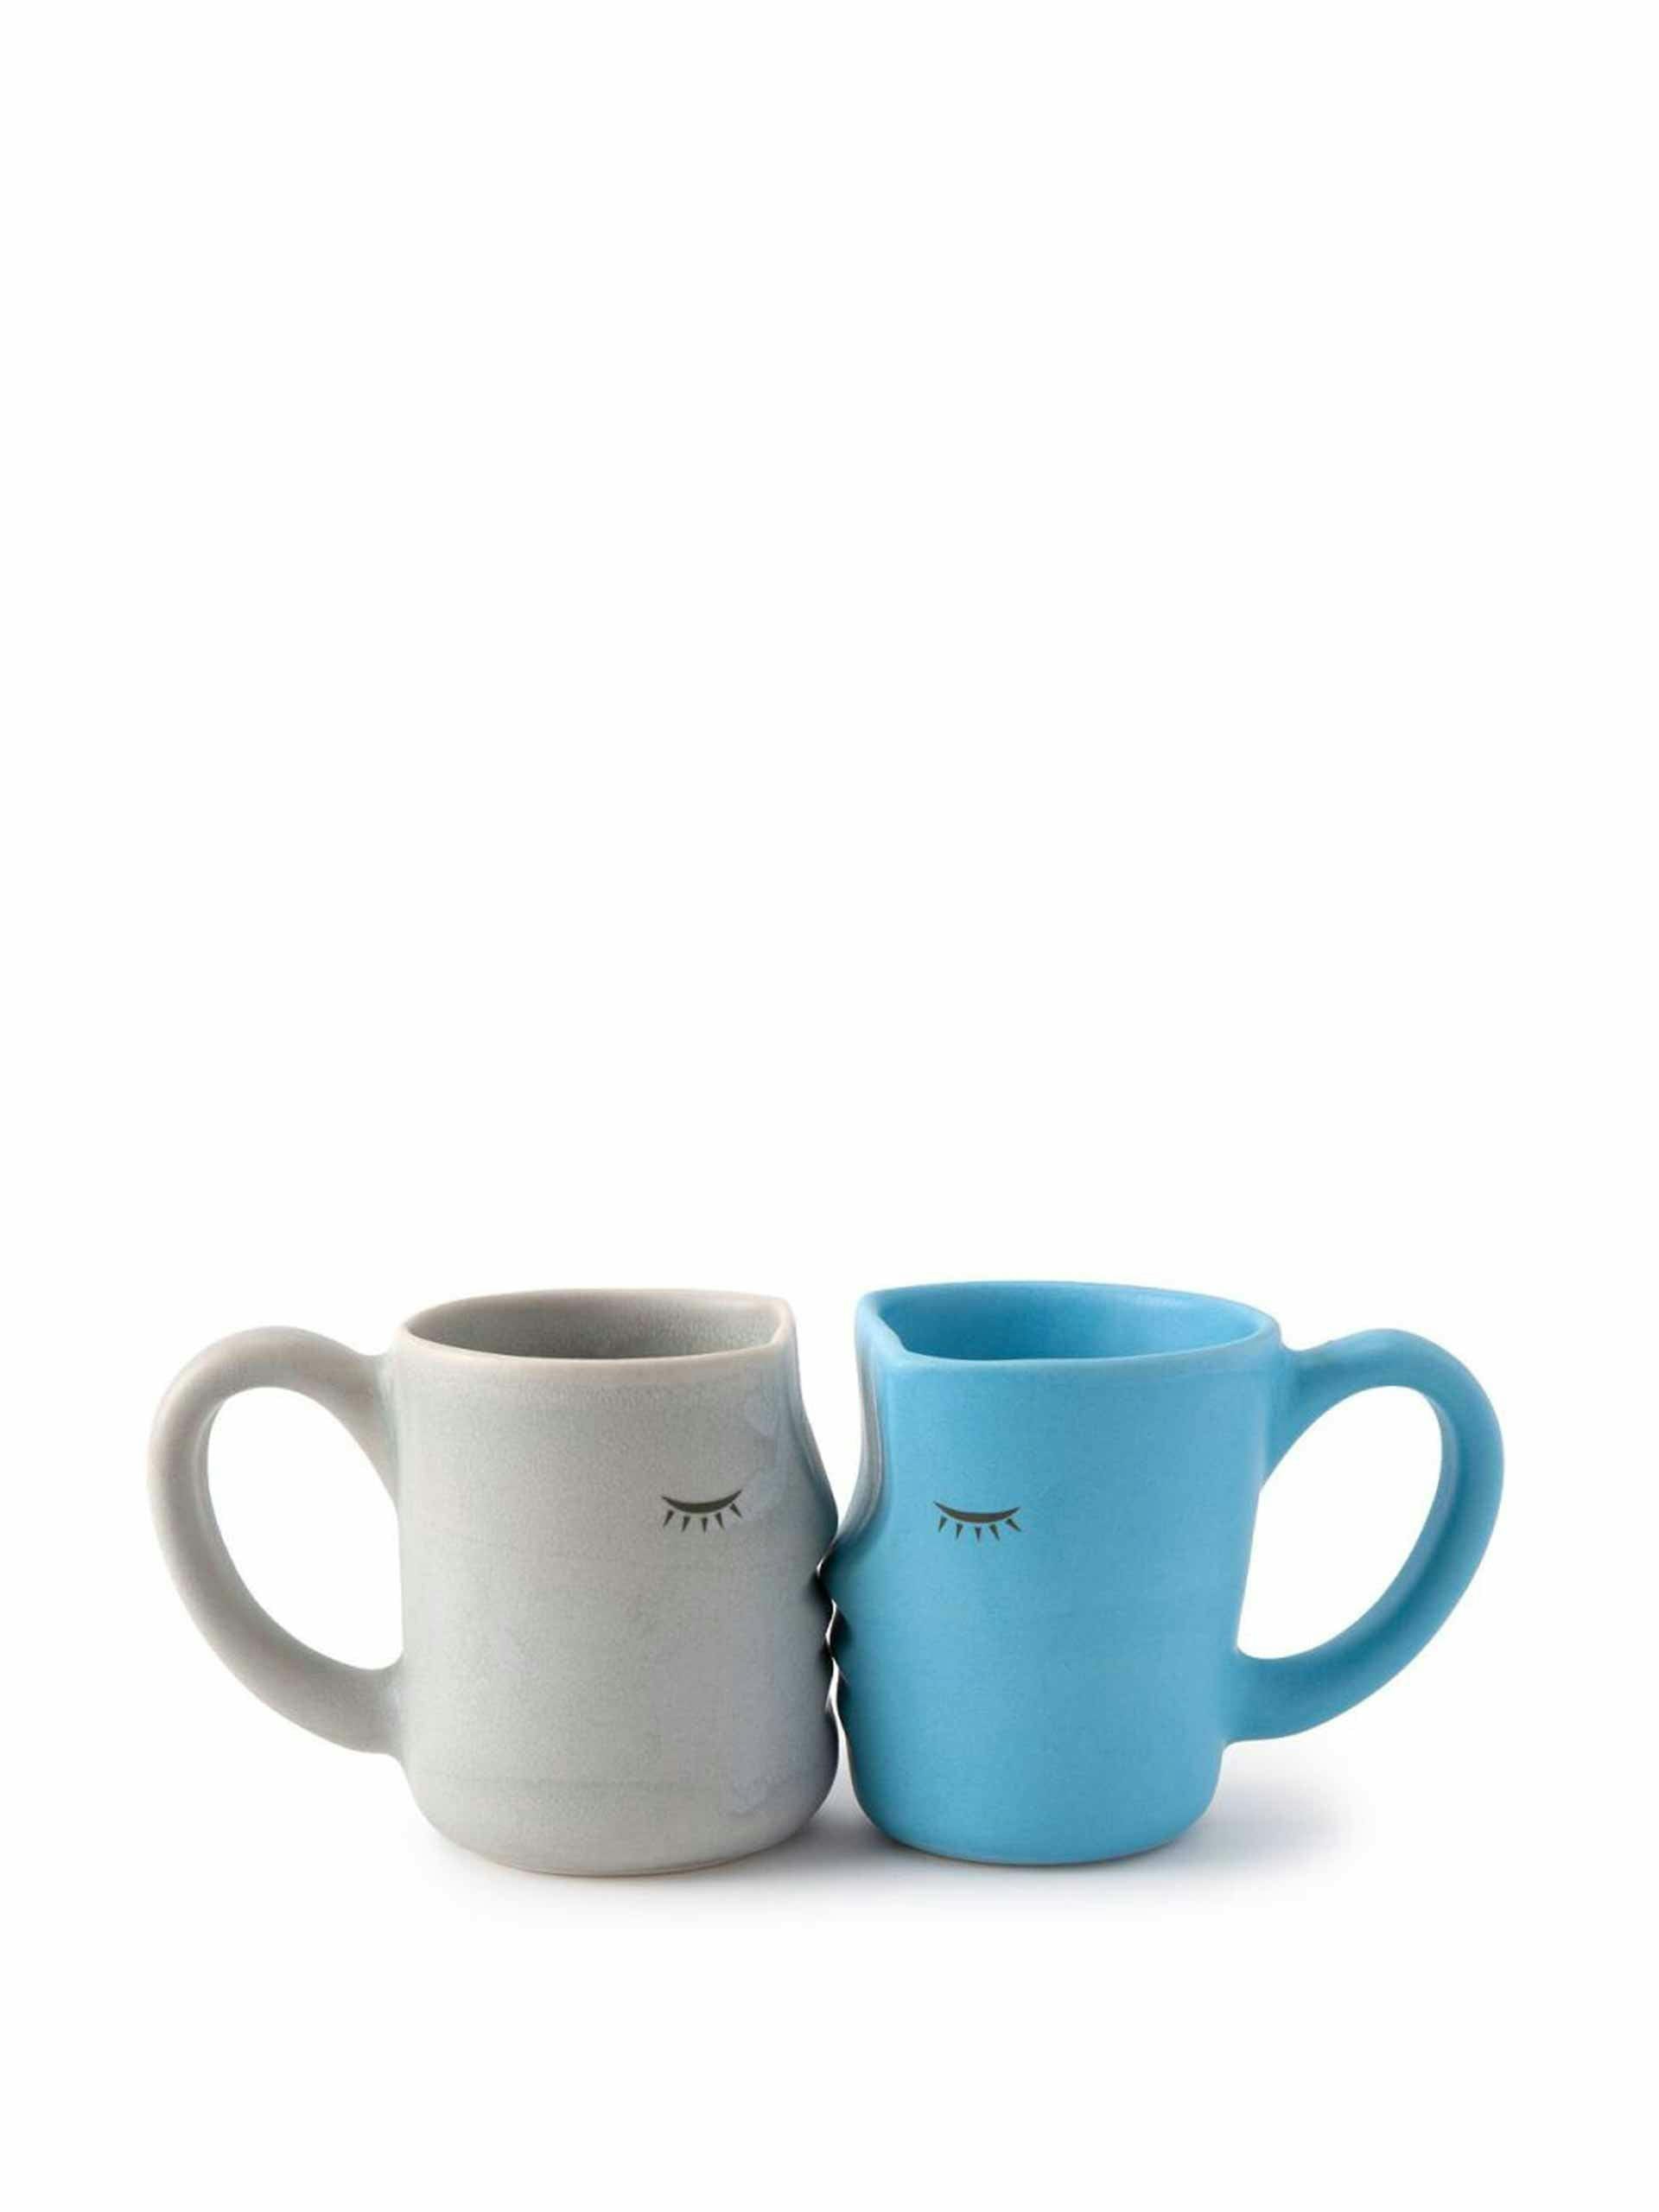 Kissing mugs (set of 2)